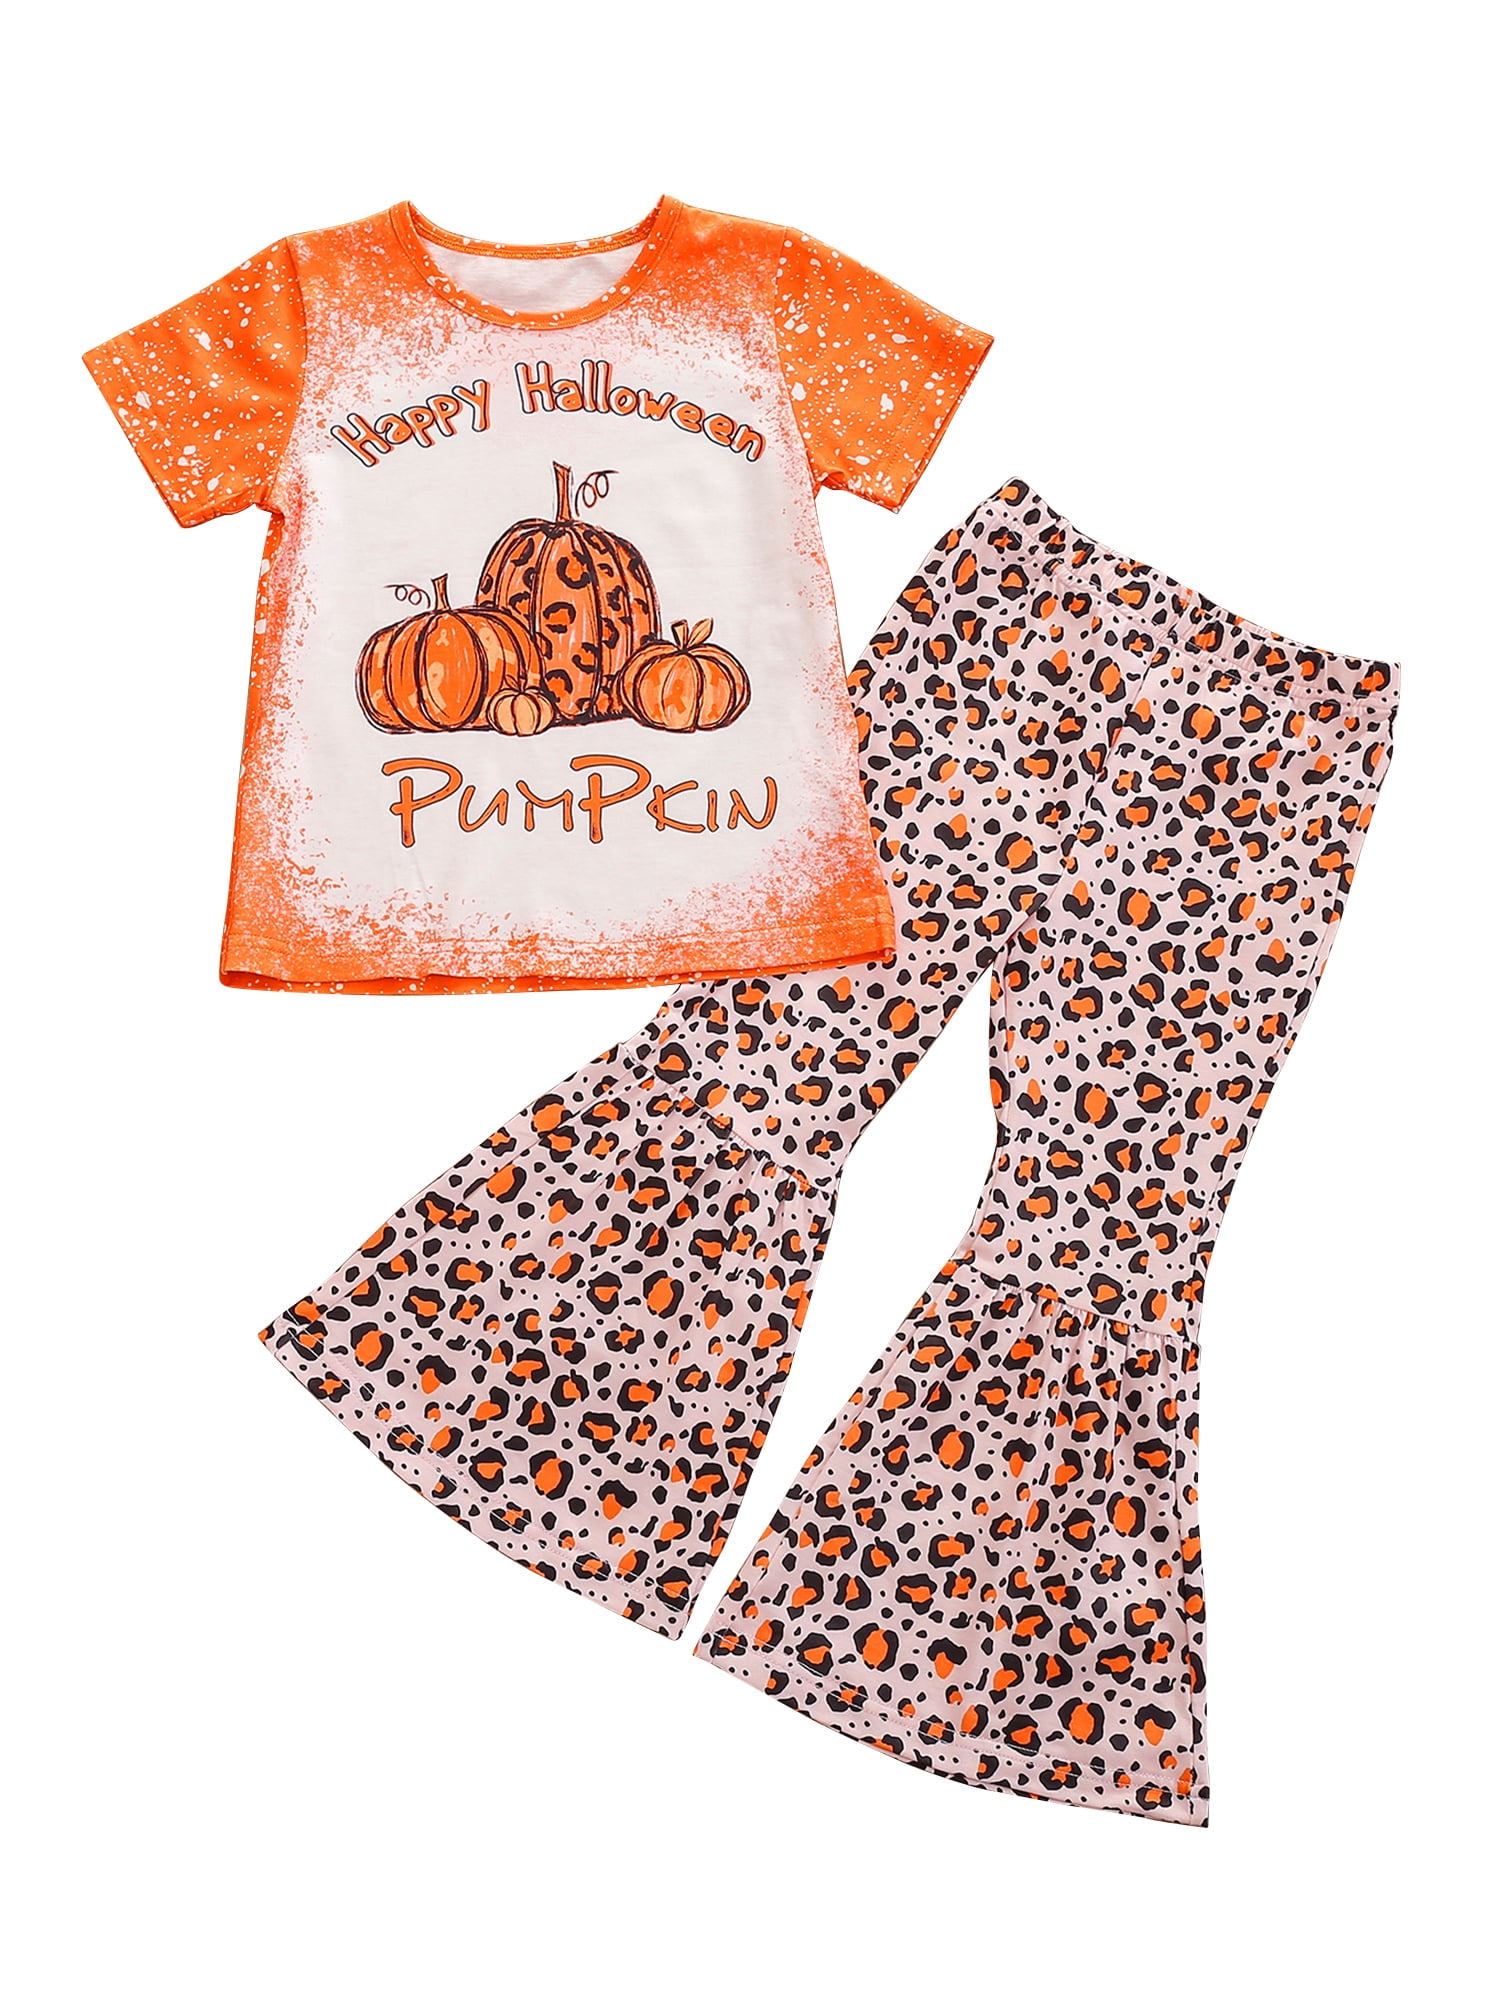 Details about   2PCS Baby Girls Boys Halloween Pumpkin Clothes Set Infant Romper Hats Outfits 